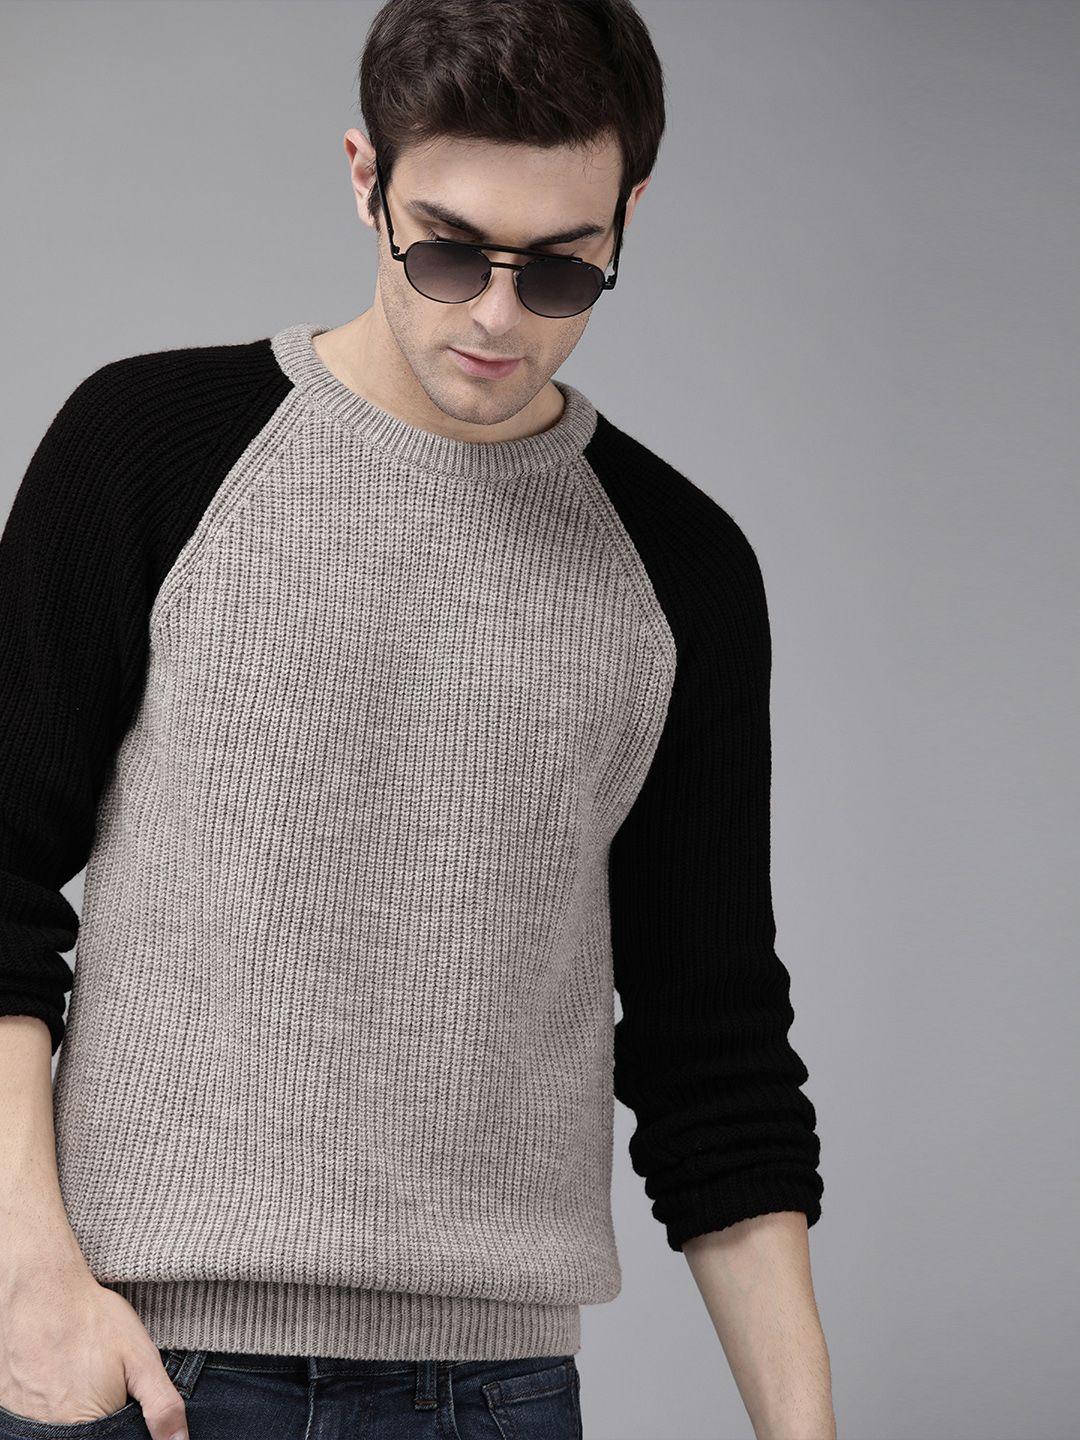 the roadster lifestyle co men grey melange self design sweater